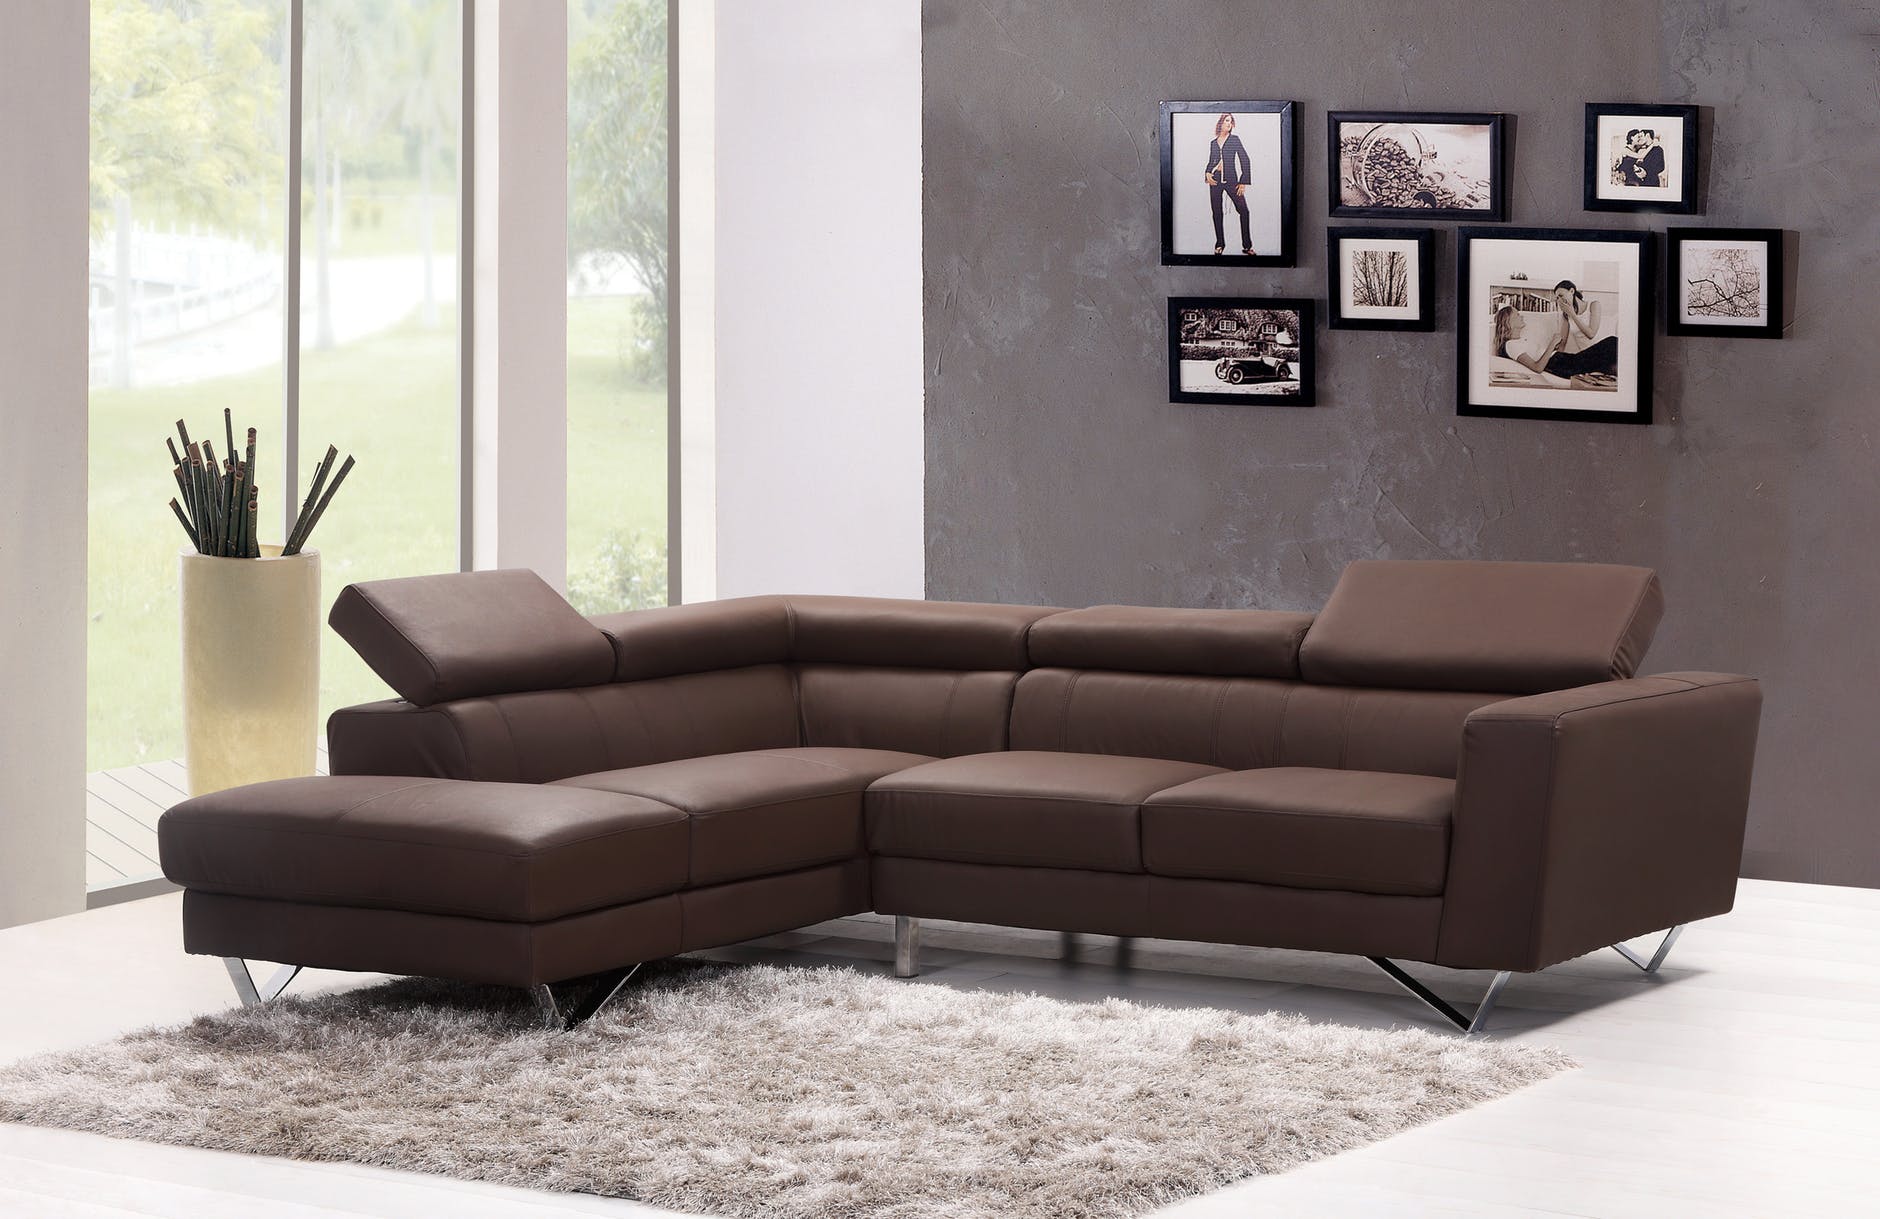 5 Things On Choosing Sofa Set Designs For A Small Living Room